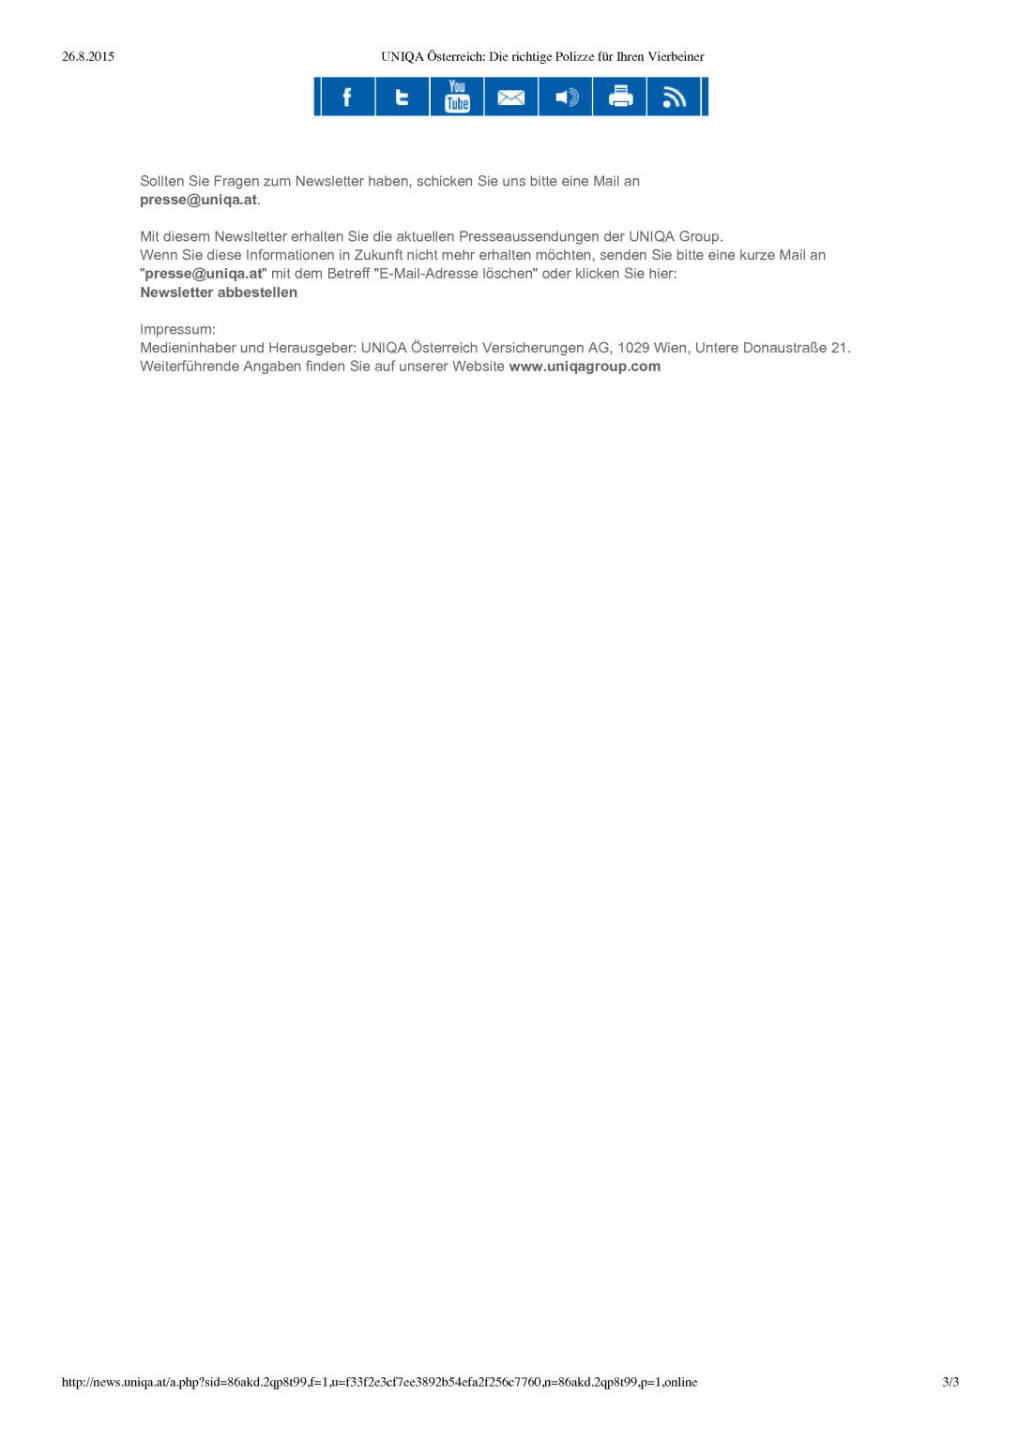 Uniqua Polizze für Vierbeiner, Seite 3/3, komplettes Dokument unter http://boerse-social.com/static/uploads/file_310_uniqua_polizze_fur_vierbeiner.pdf